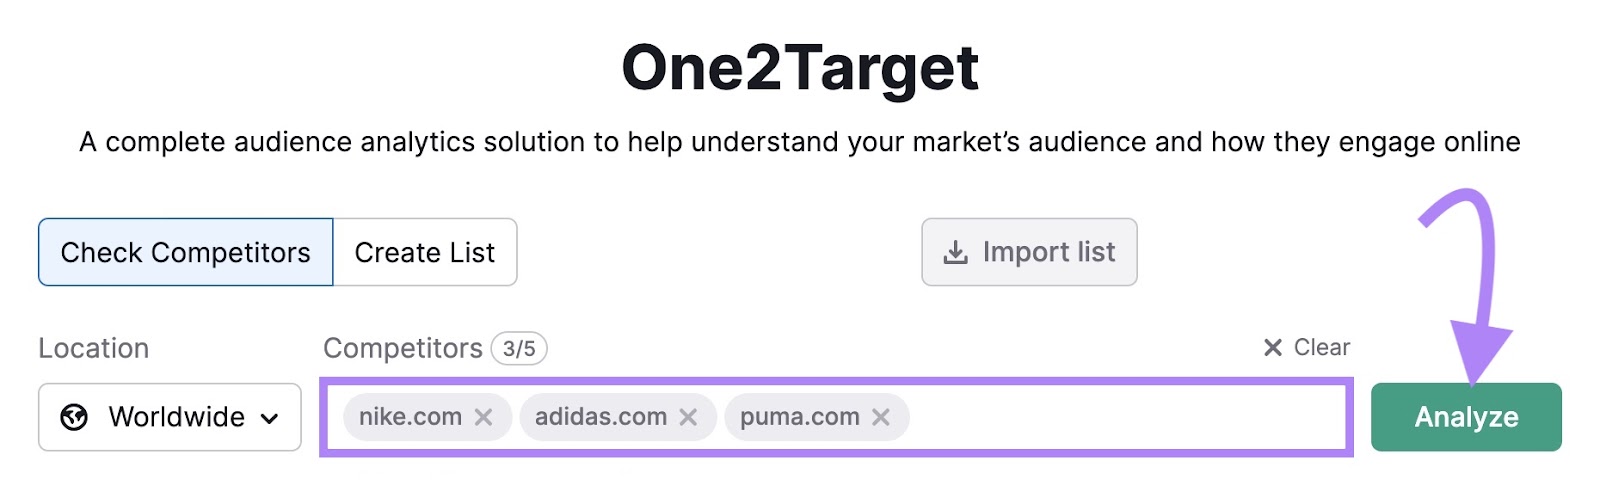 One2Target instrumentality   interface with “nike.com,” “adidas.com,” and “puma.com” entered successful  the domain bar.